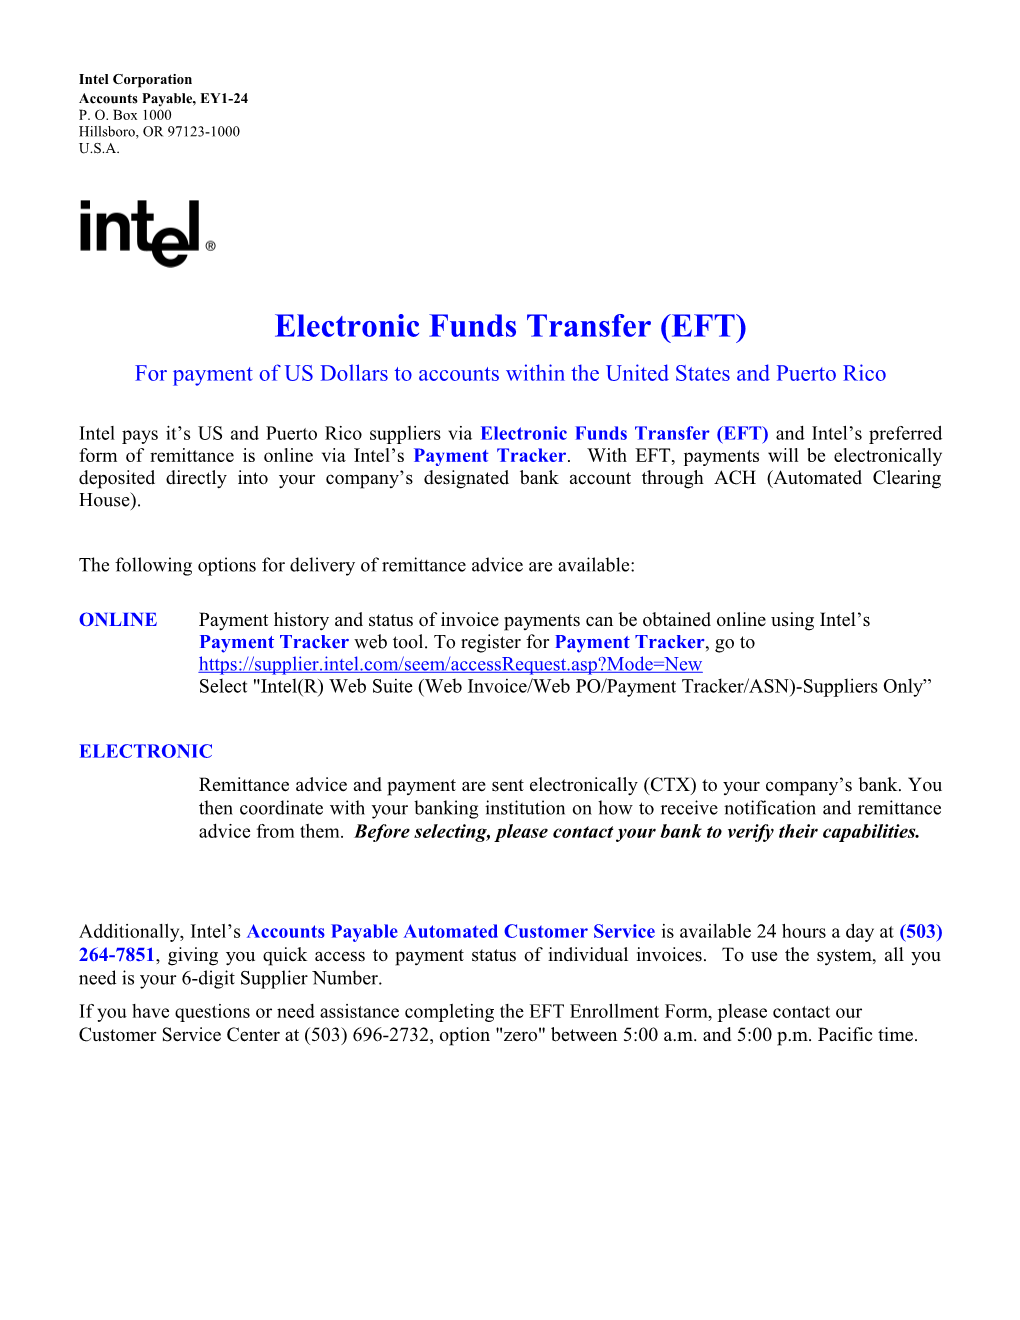 Electronic Funds Transfer (EFT)